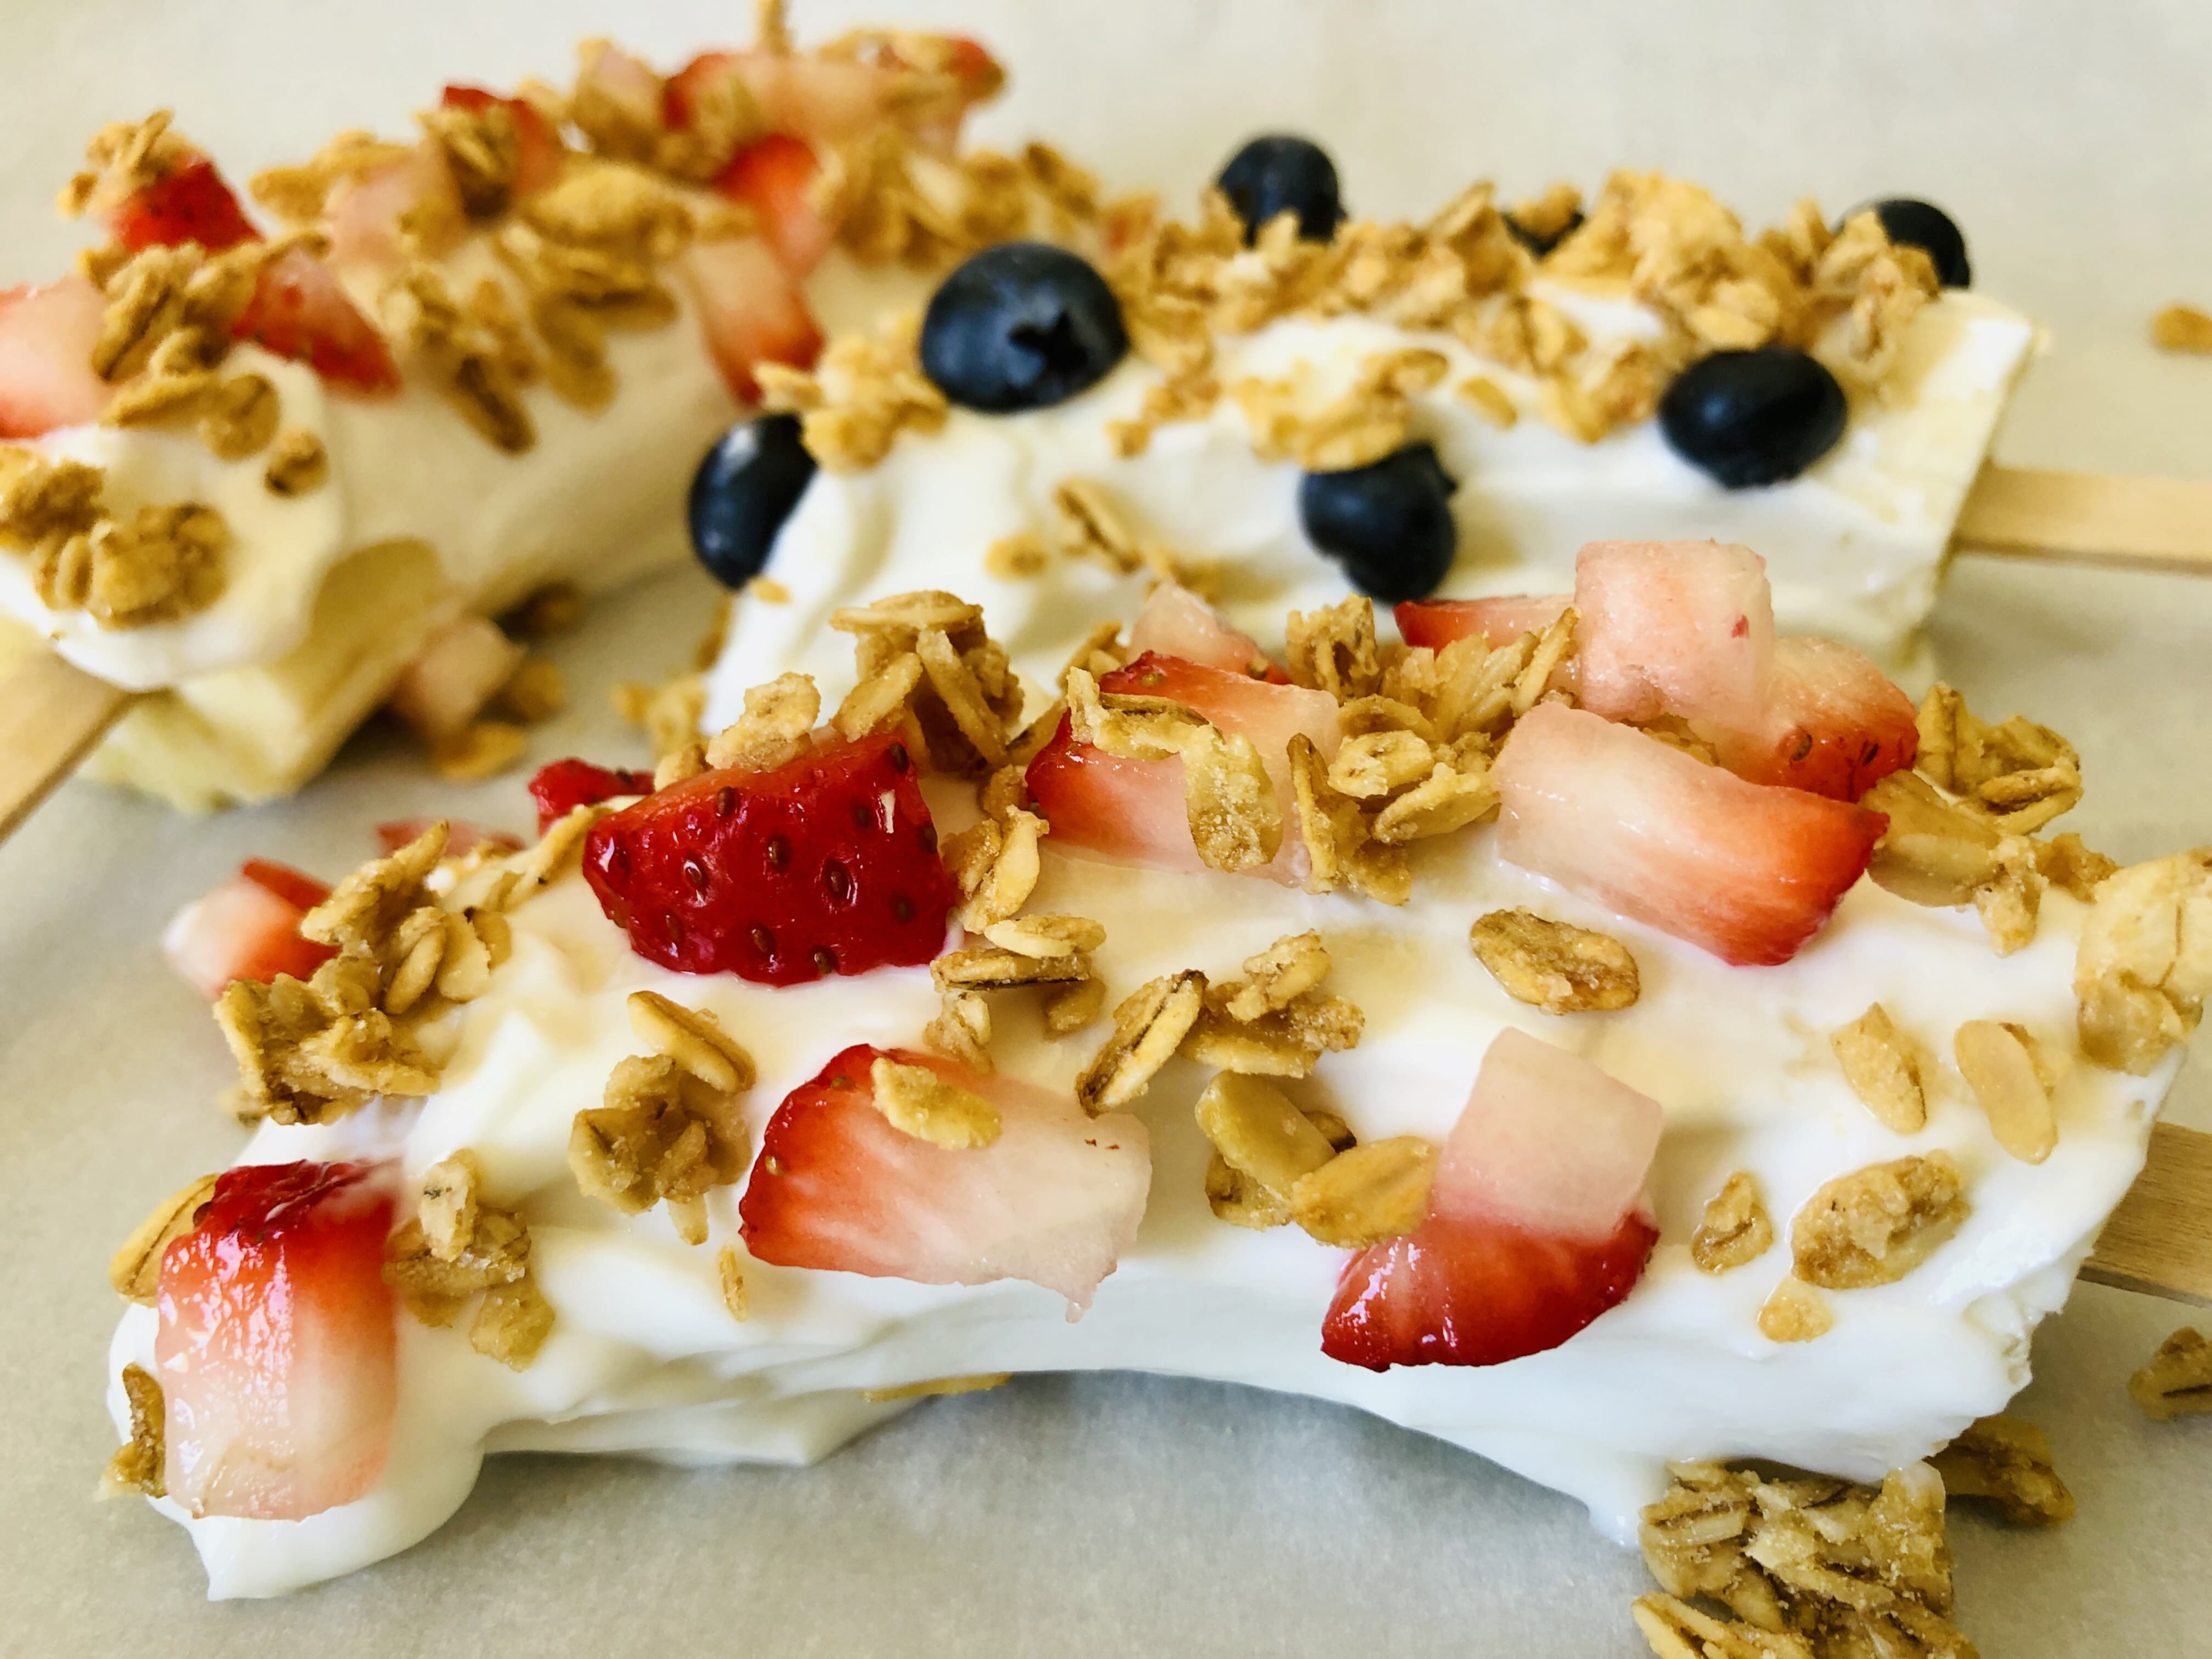 yogurt covered bananas with strawberry and granola